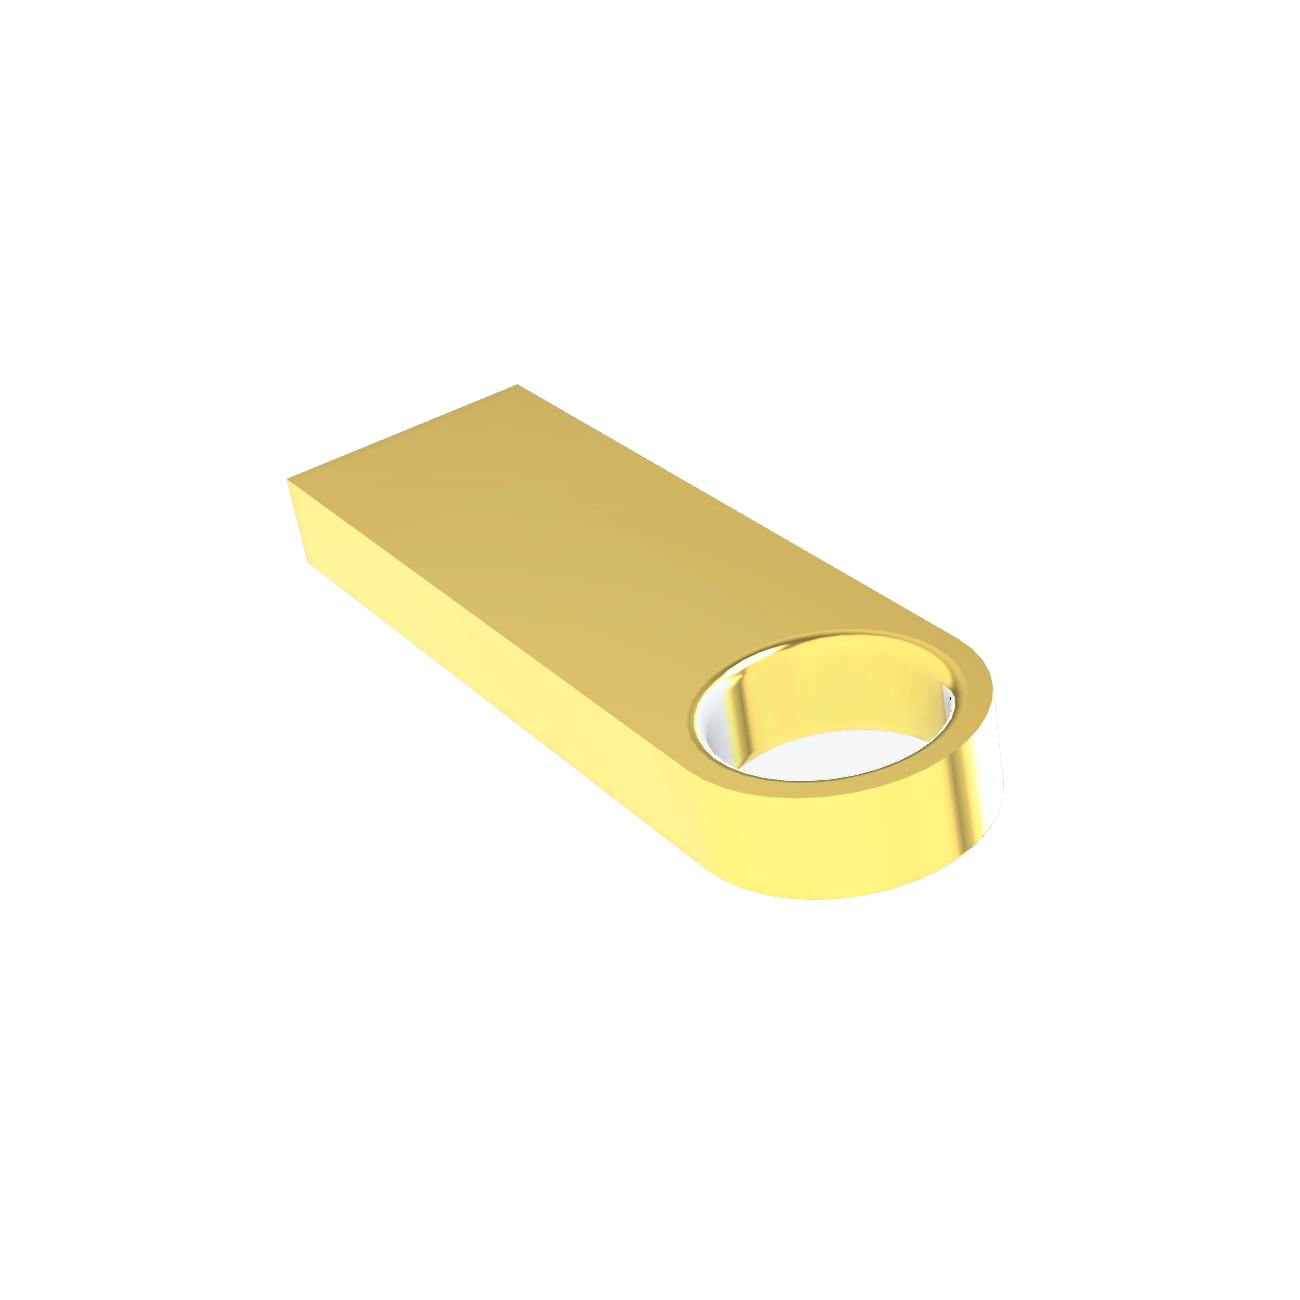 USB GERMANY ® SE09 (Gold, GB) 4 USB-Stick